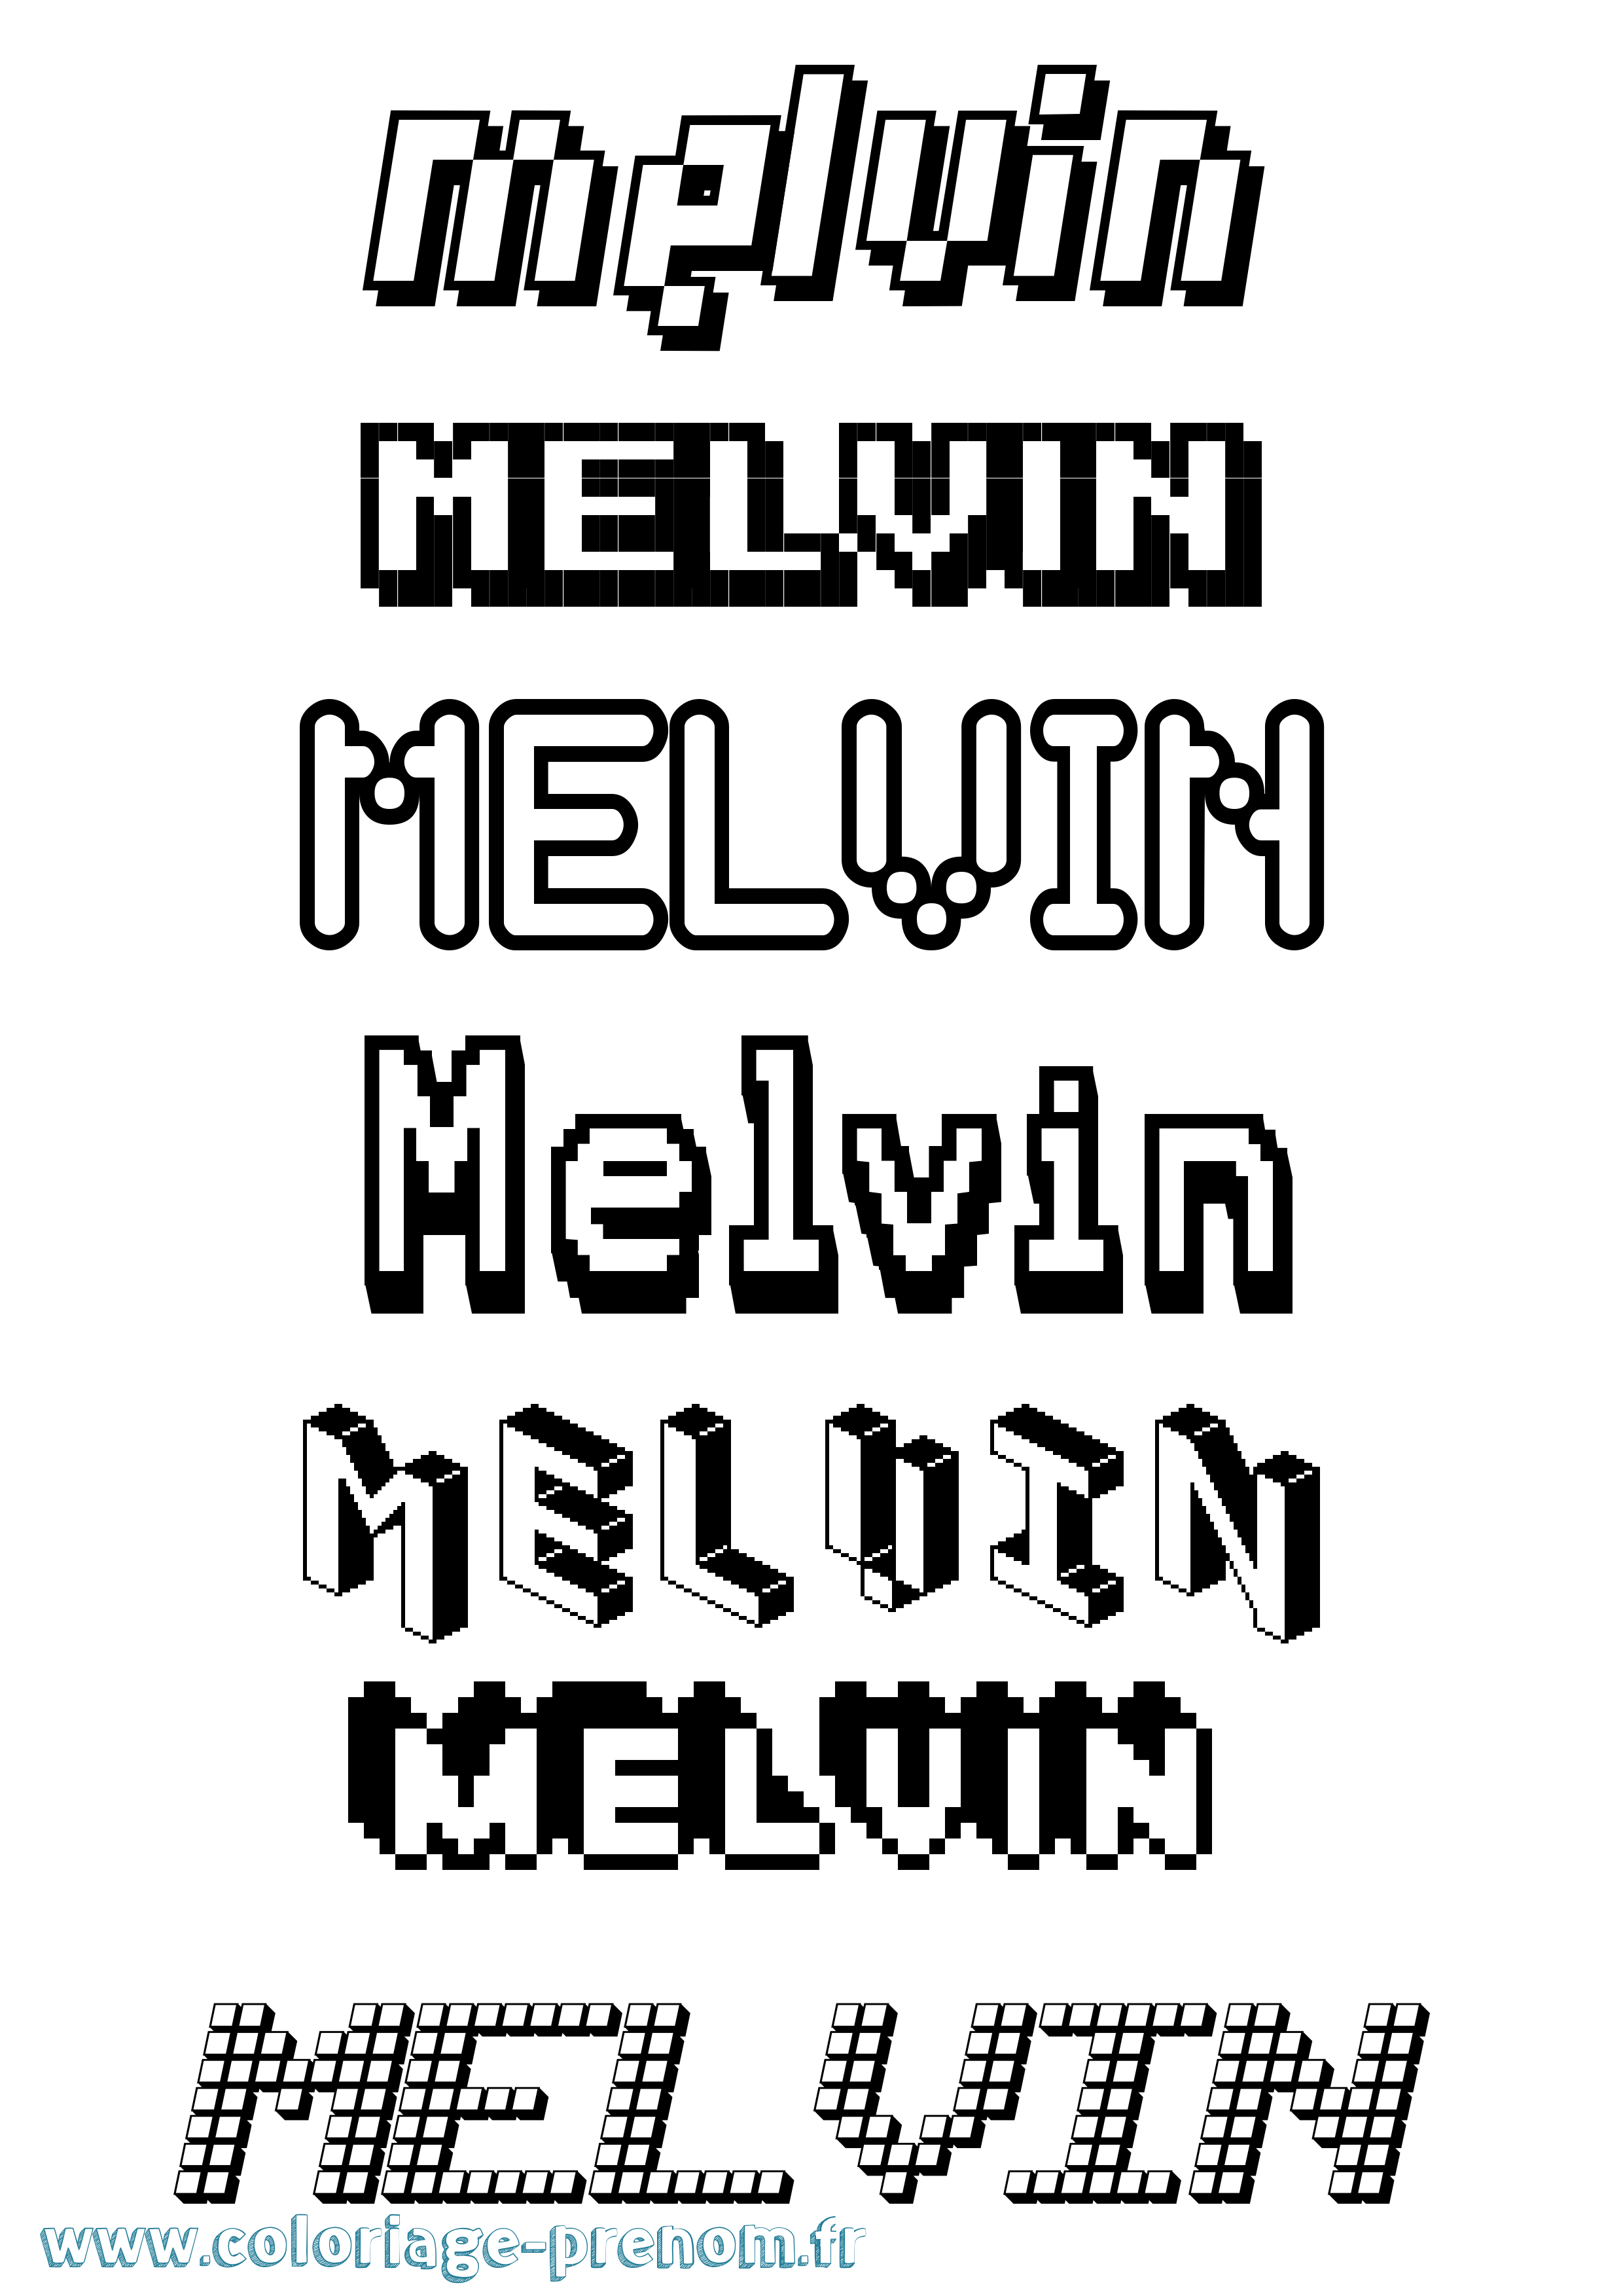 Coloriage prénom Melvin Pixel